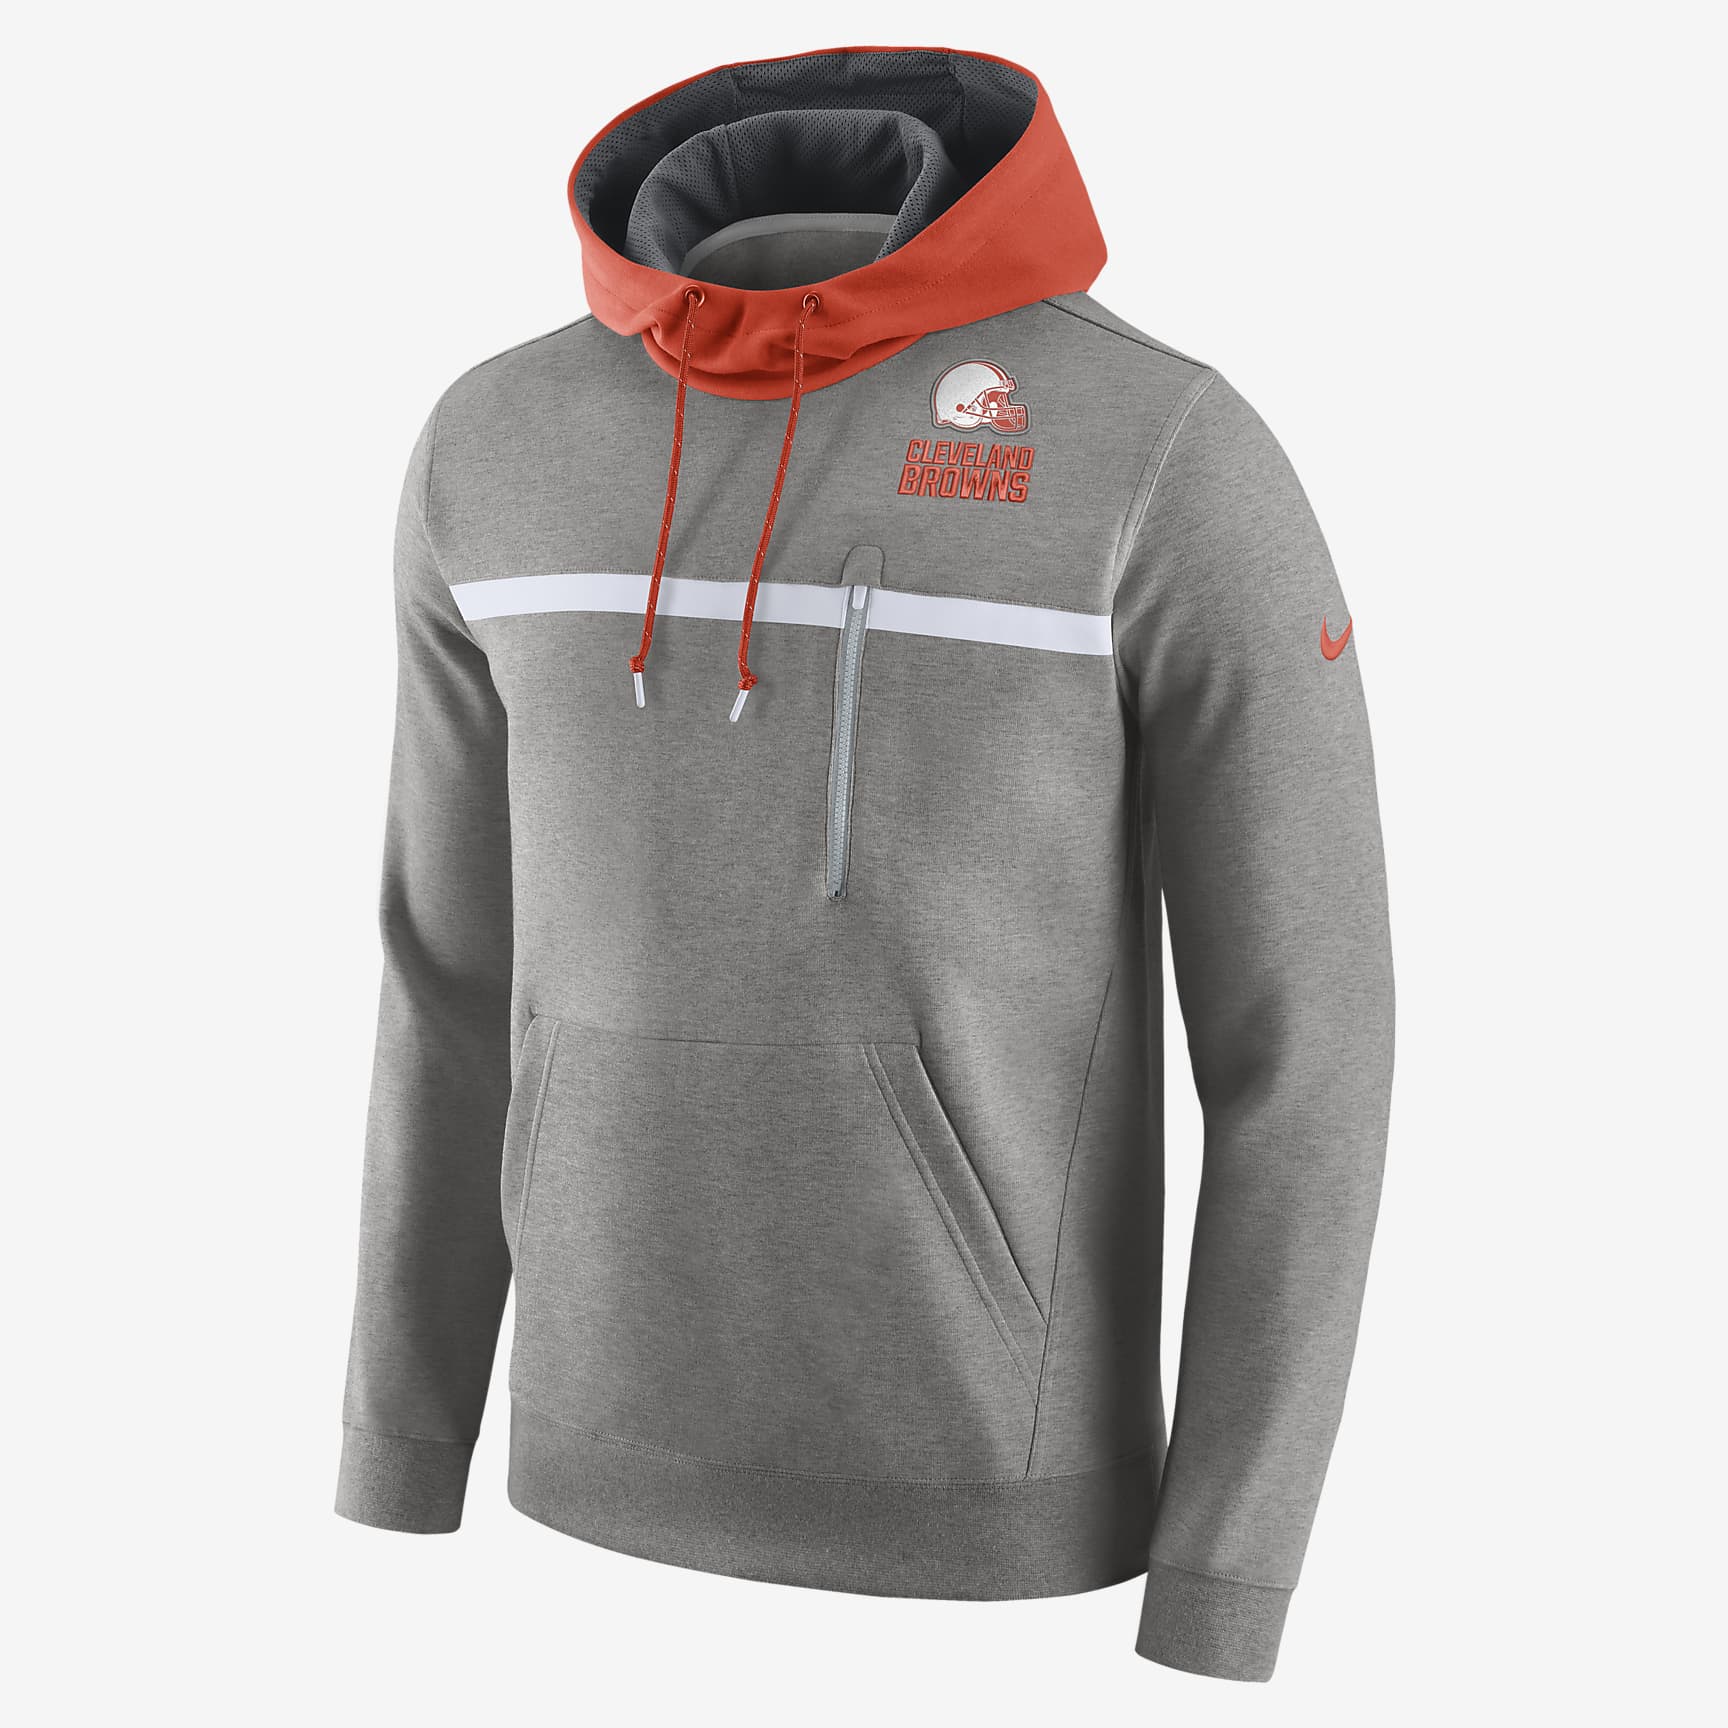 Nike Championship Drive Sweatshirt (NFL Browns) Men's Hoodie. Nike RO